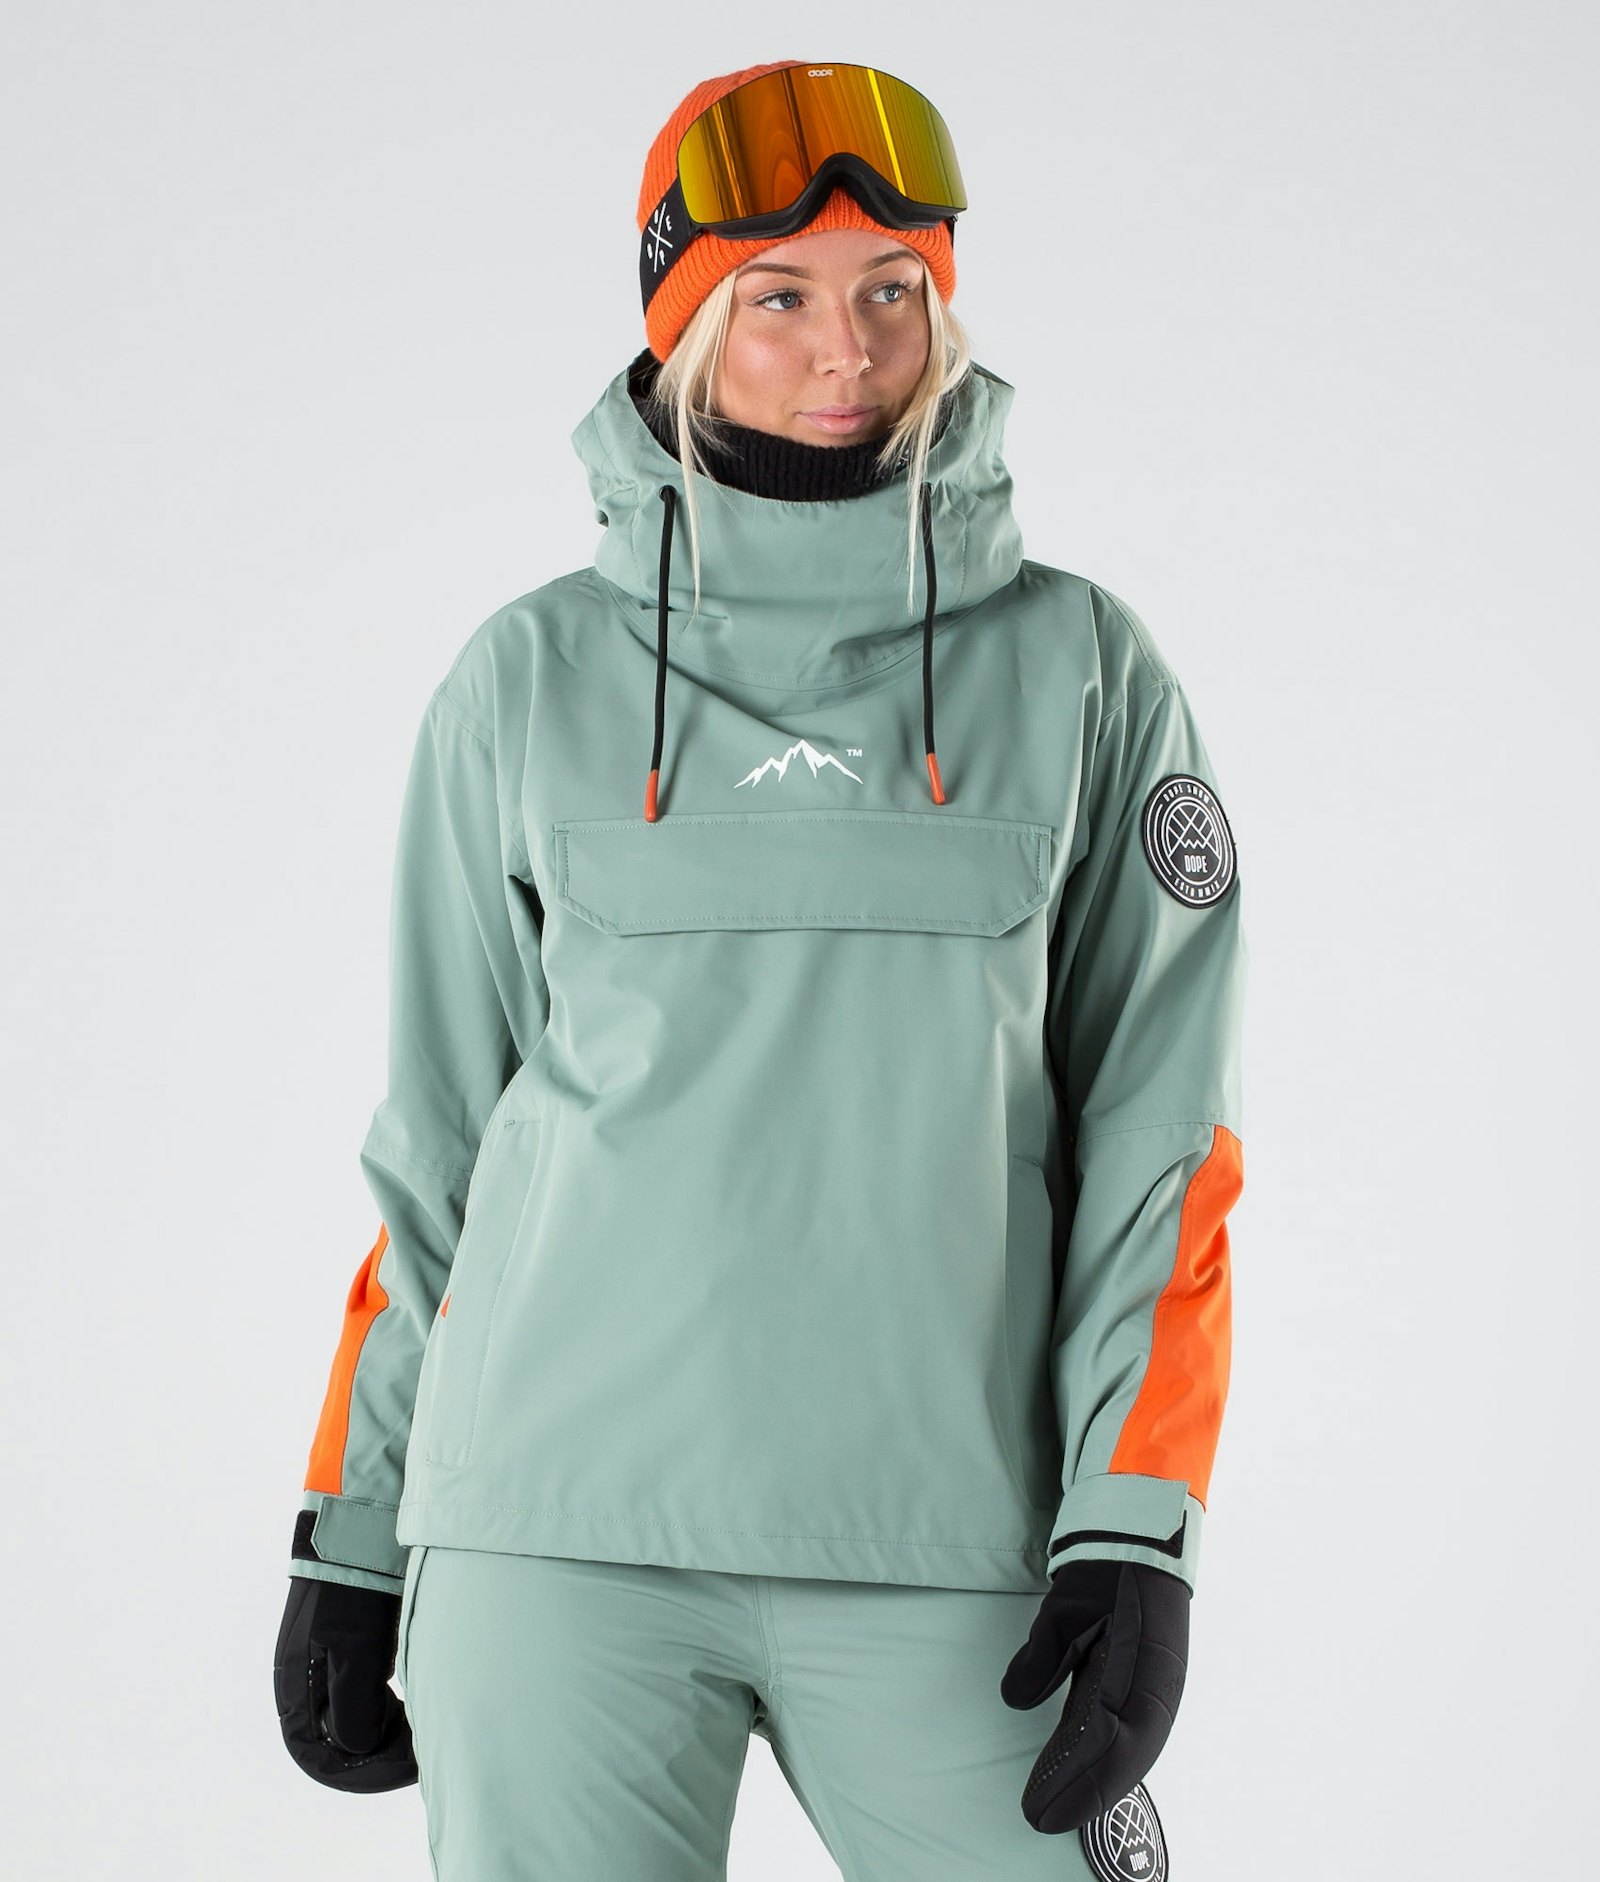 Dope Blizzard W 2019 Chaqueta Snowboard Mujer Limited Edition Faded Green Orange